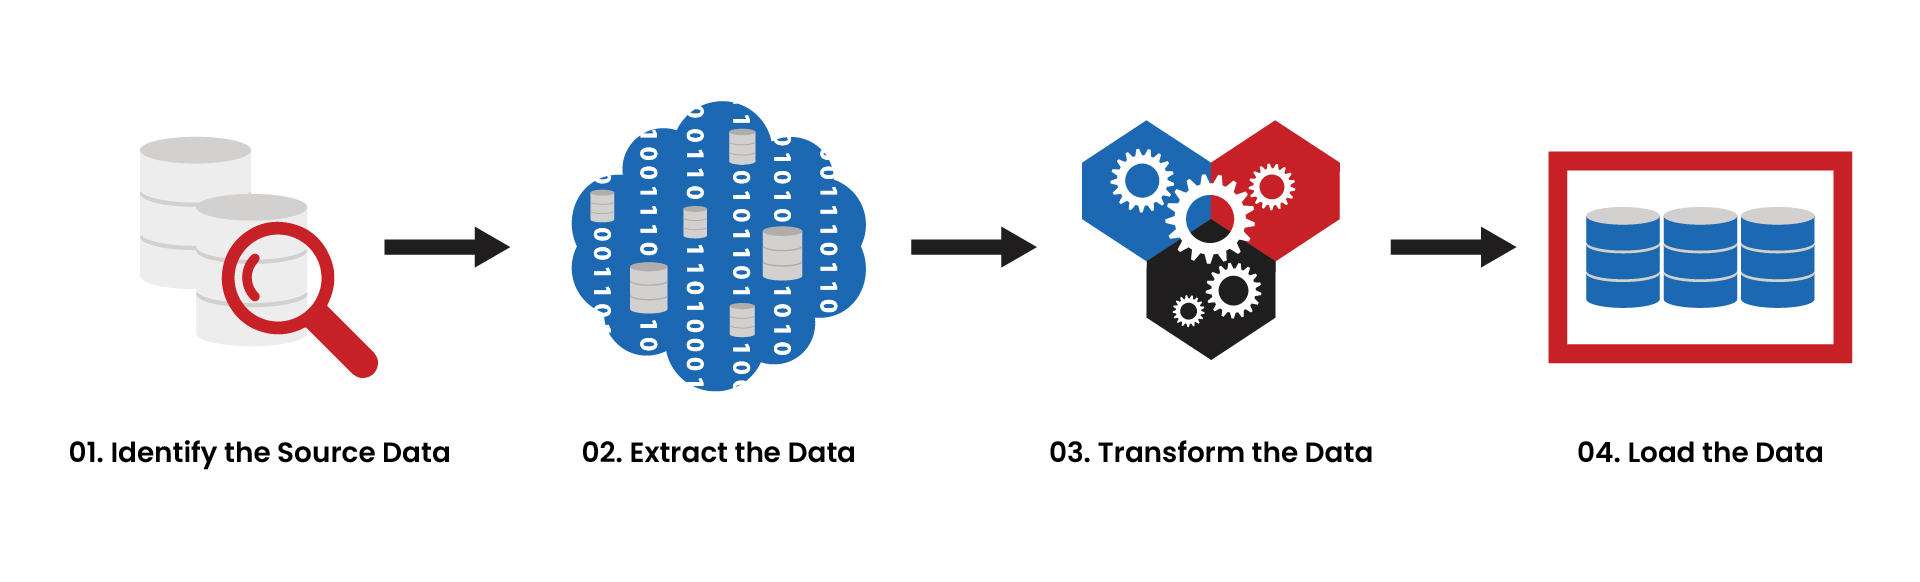 data transformation steps